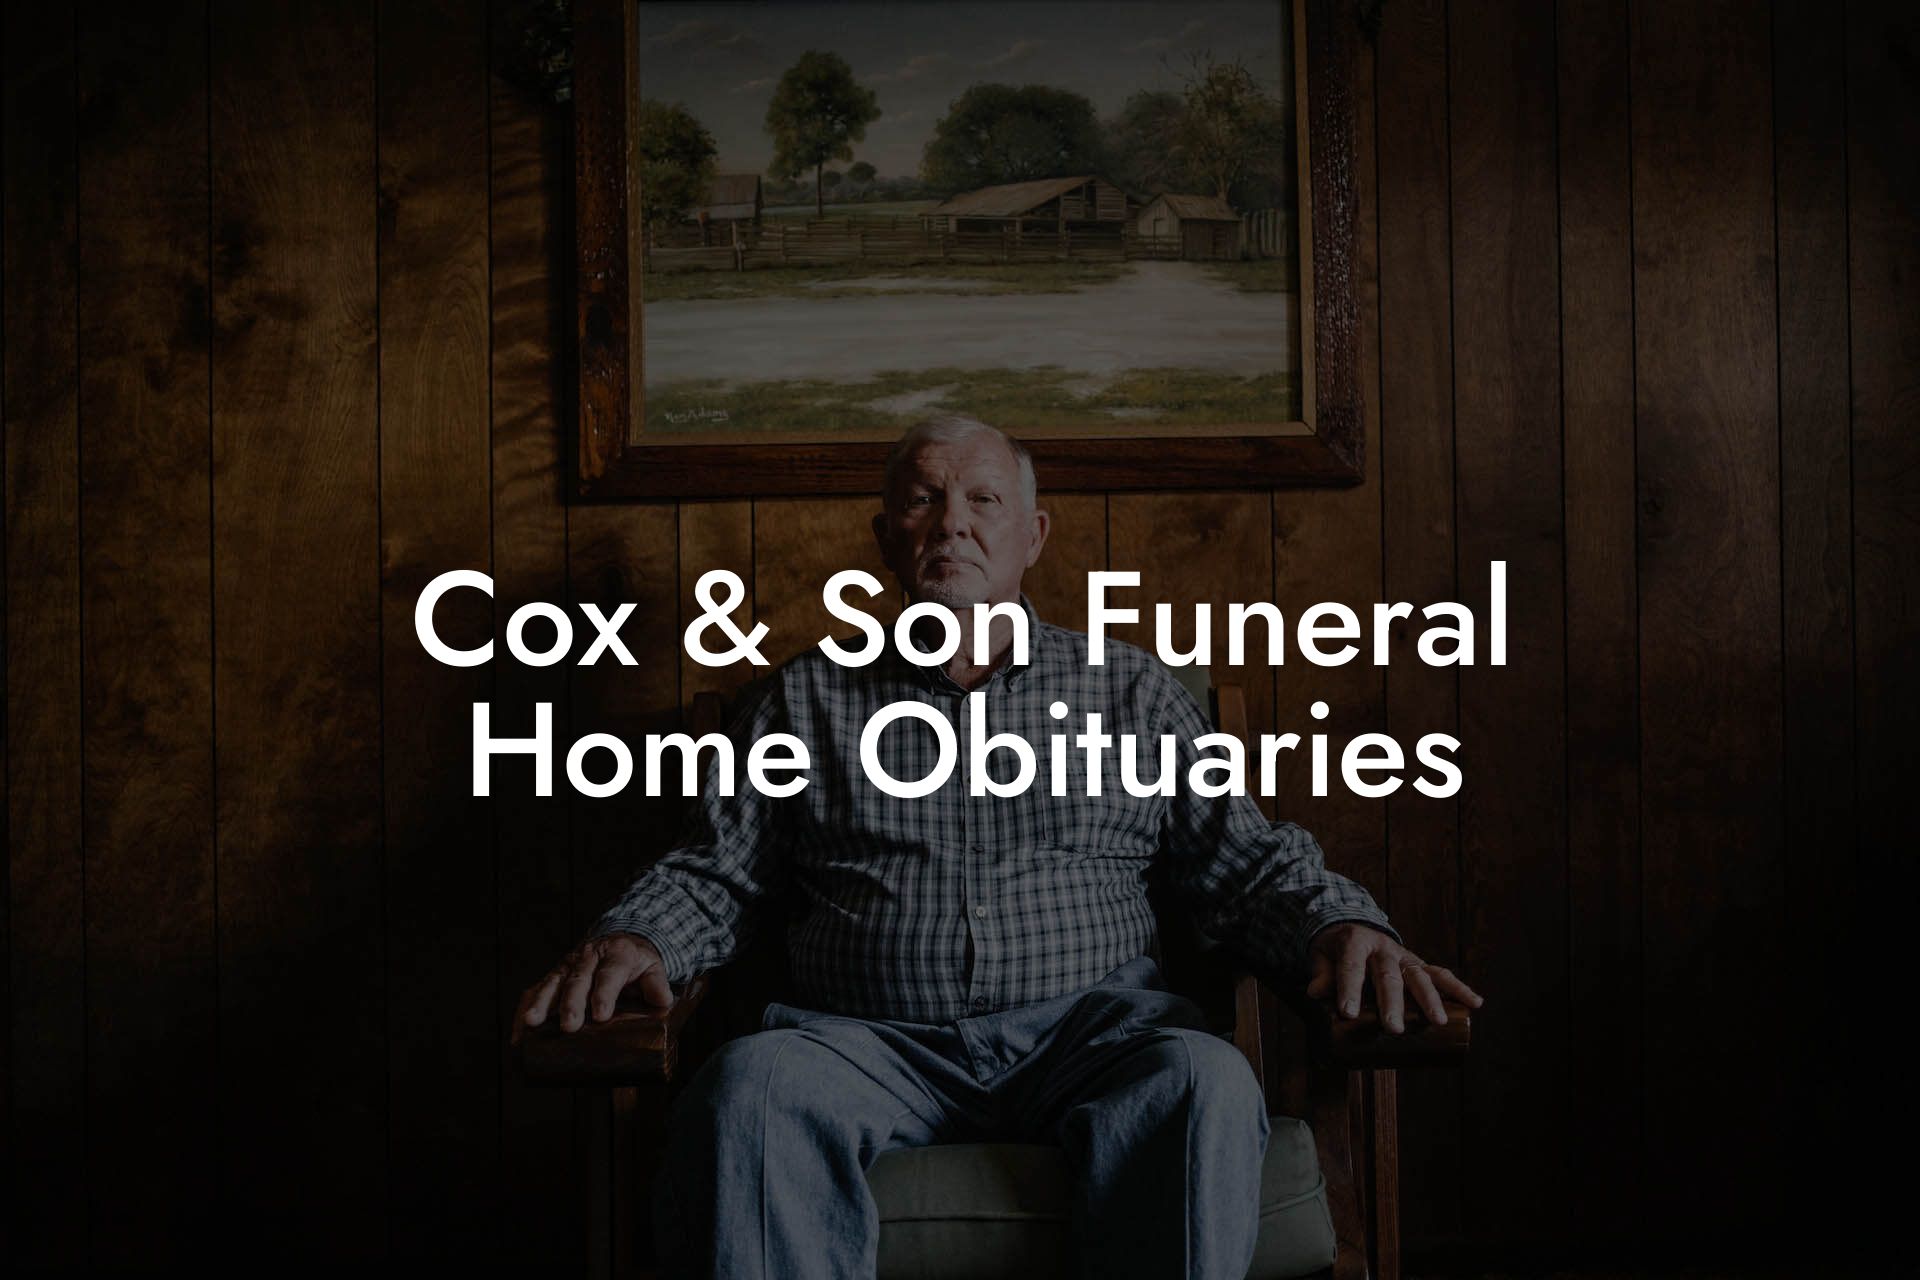 Cox & Son Funeral Home Obituaries